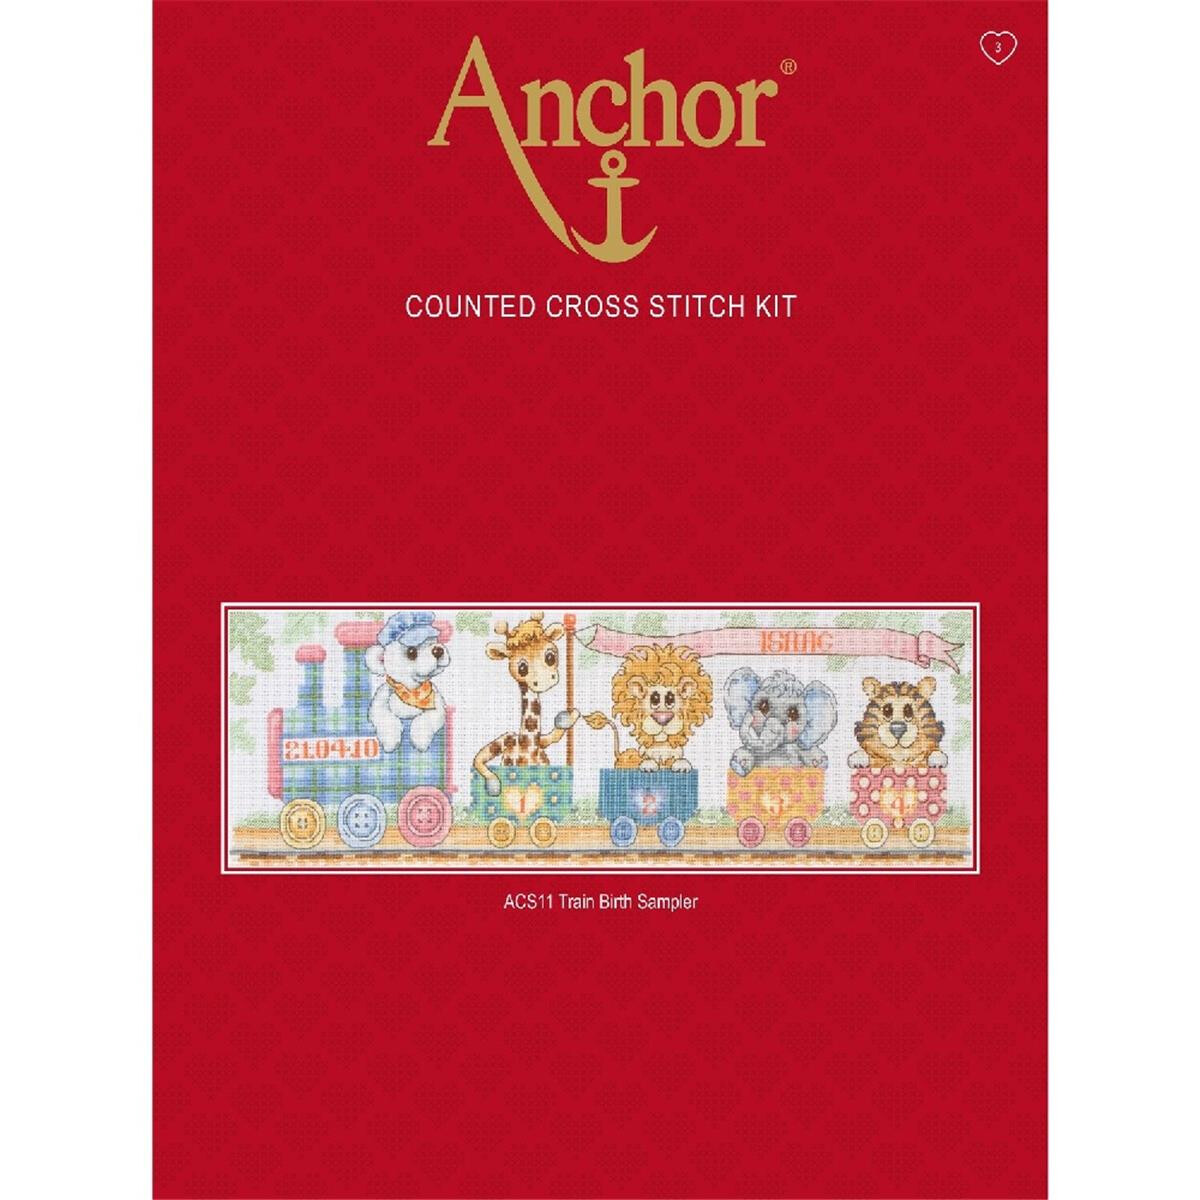 Anchor counted Cross Stitch kit "Train Birth...